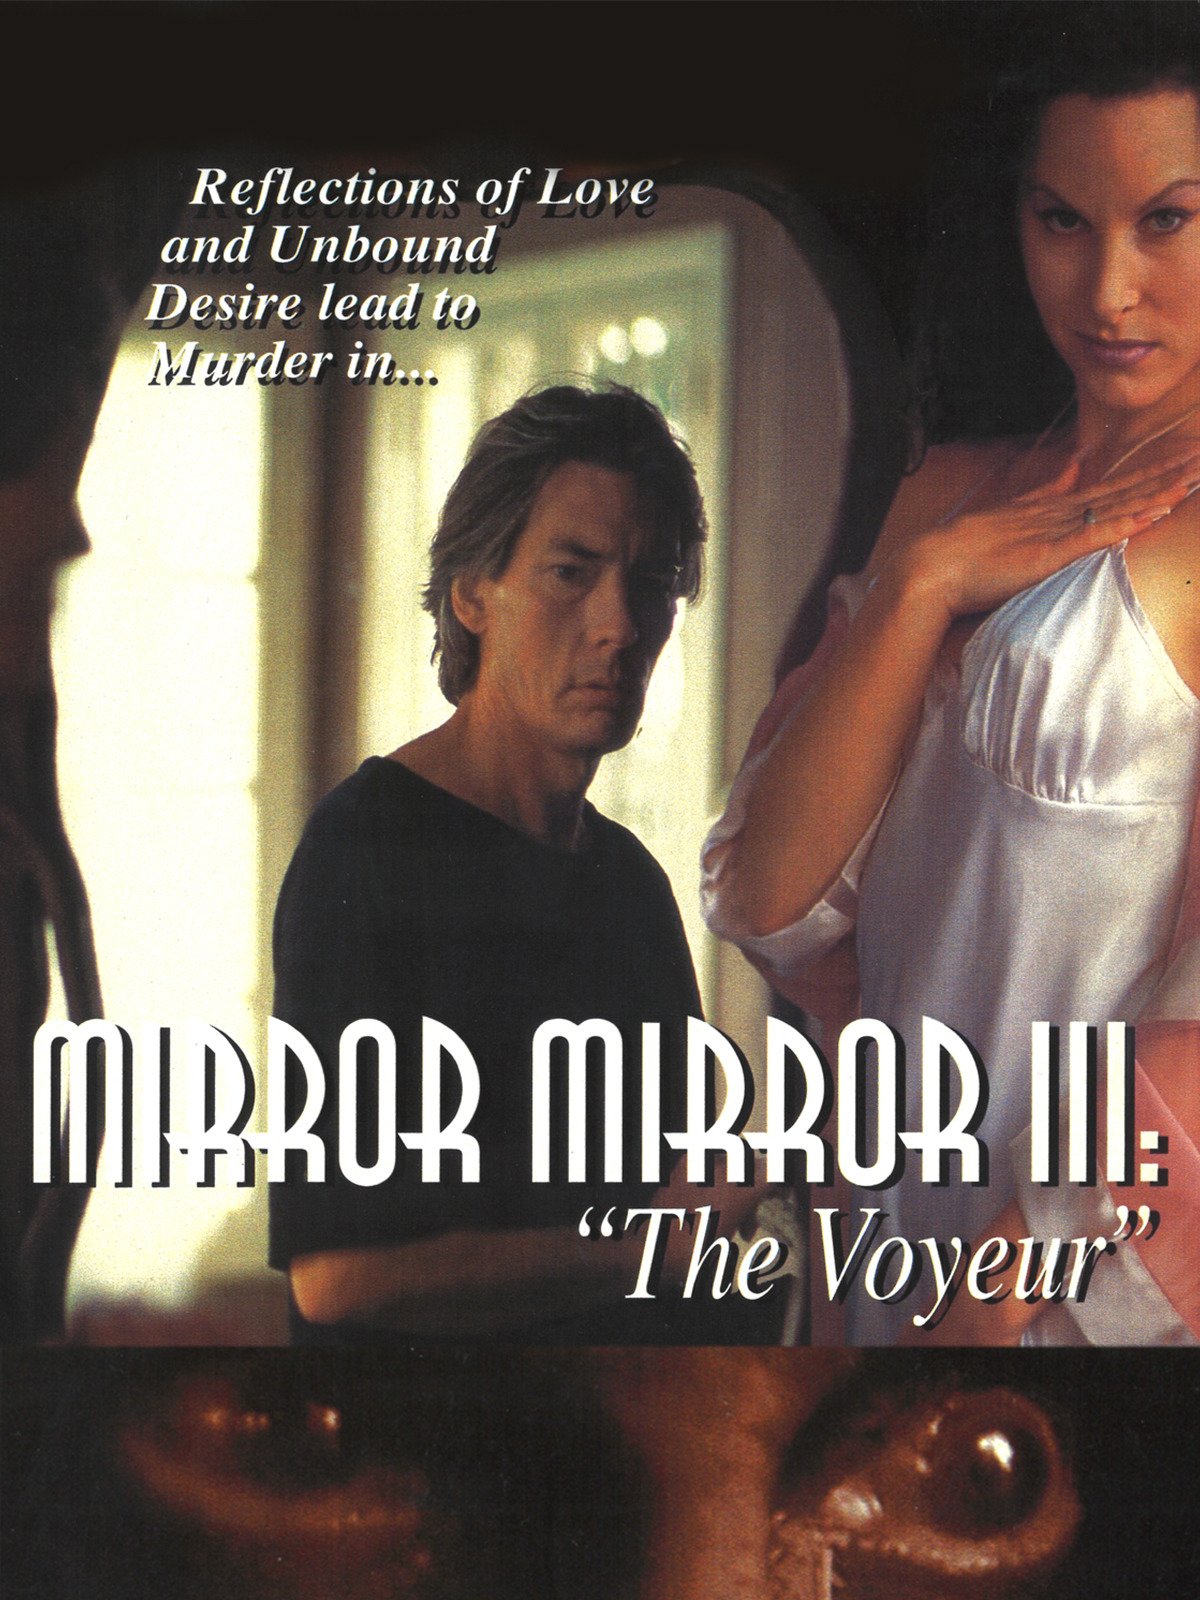 mirror mirror iii the voyeur Adult Pics Hq